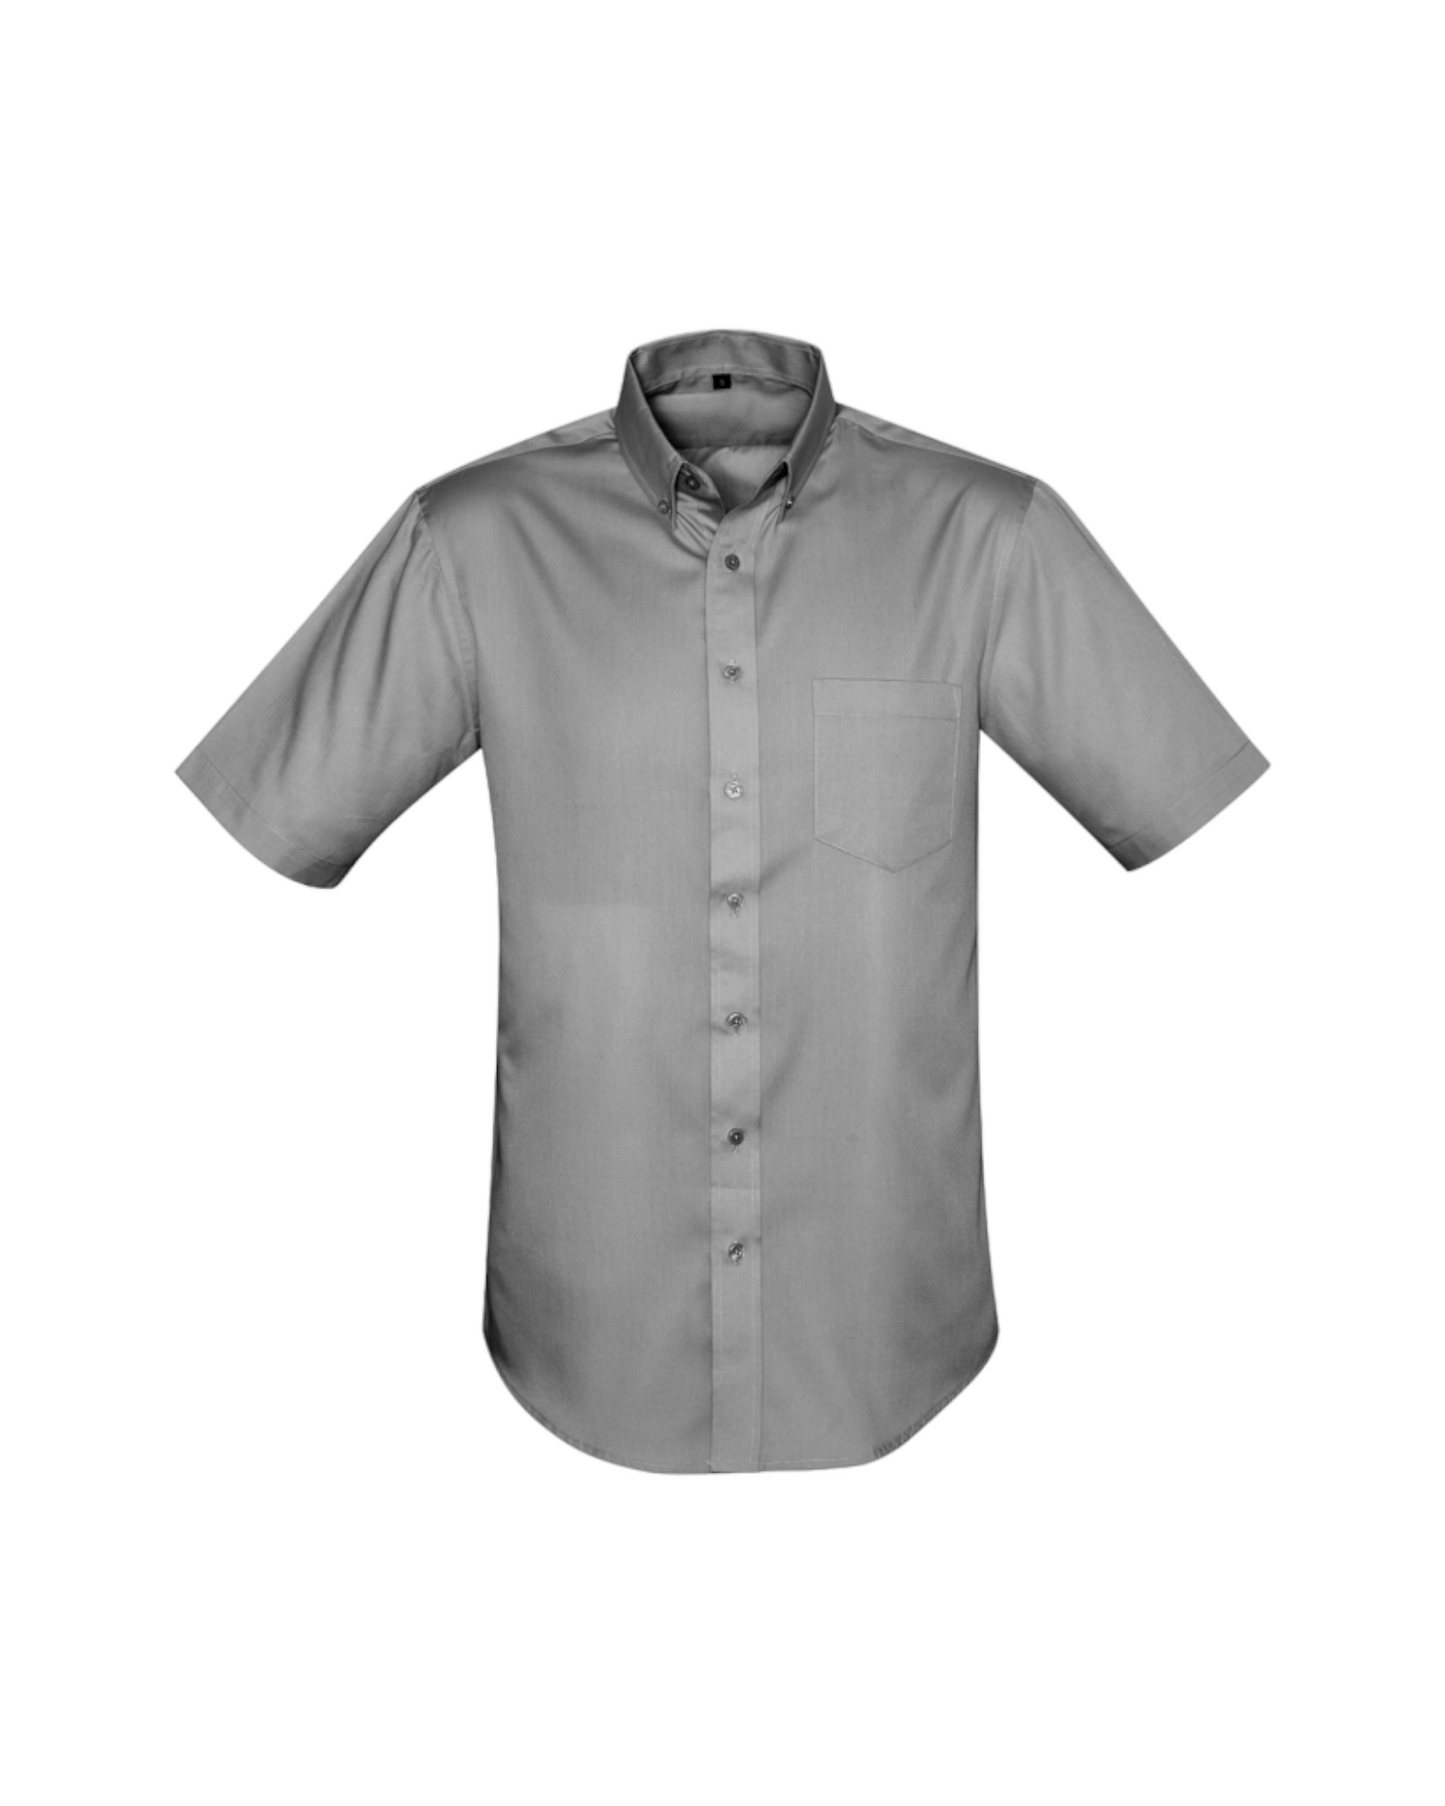 Mens Dalton Short Sleeve Shirt Fashion Biz #S522MS